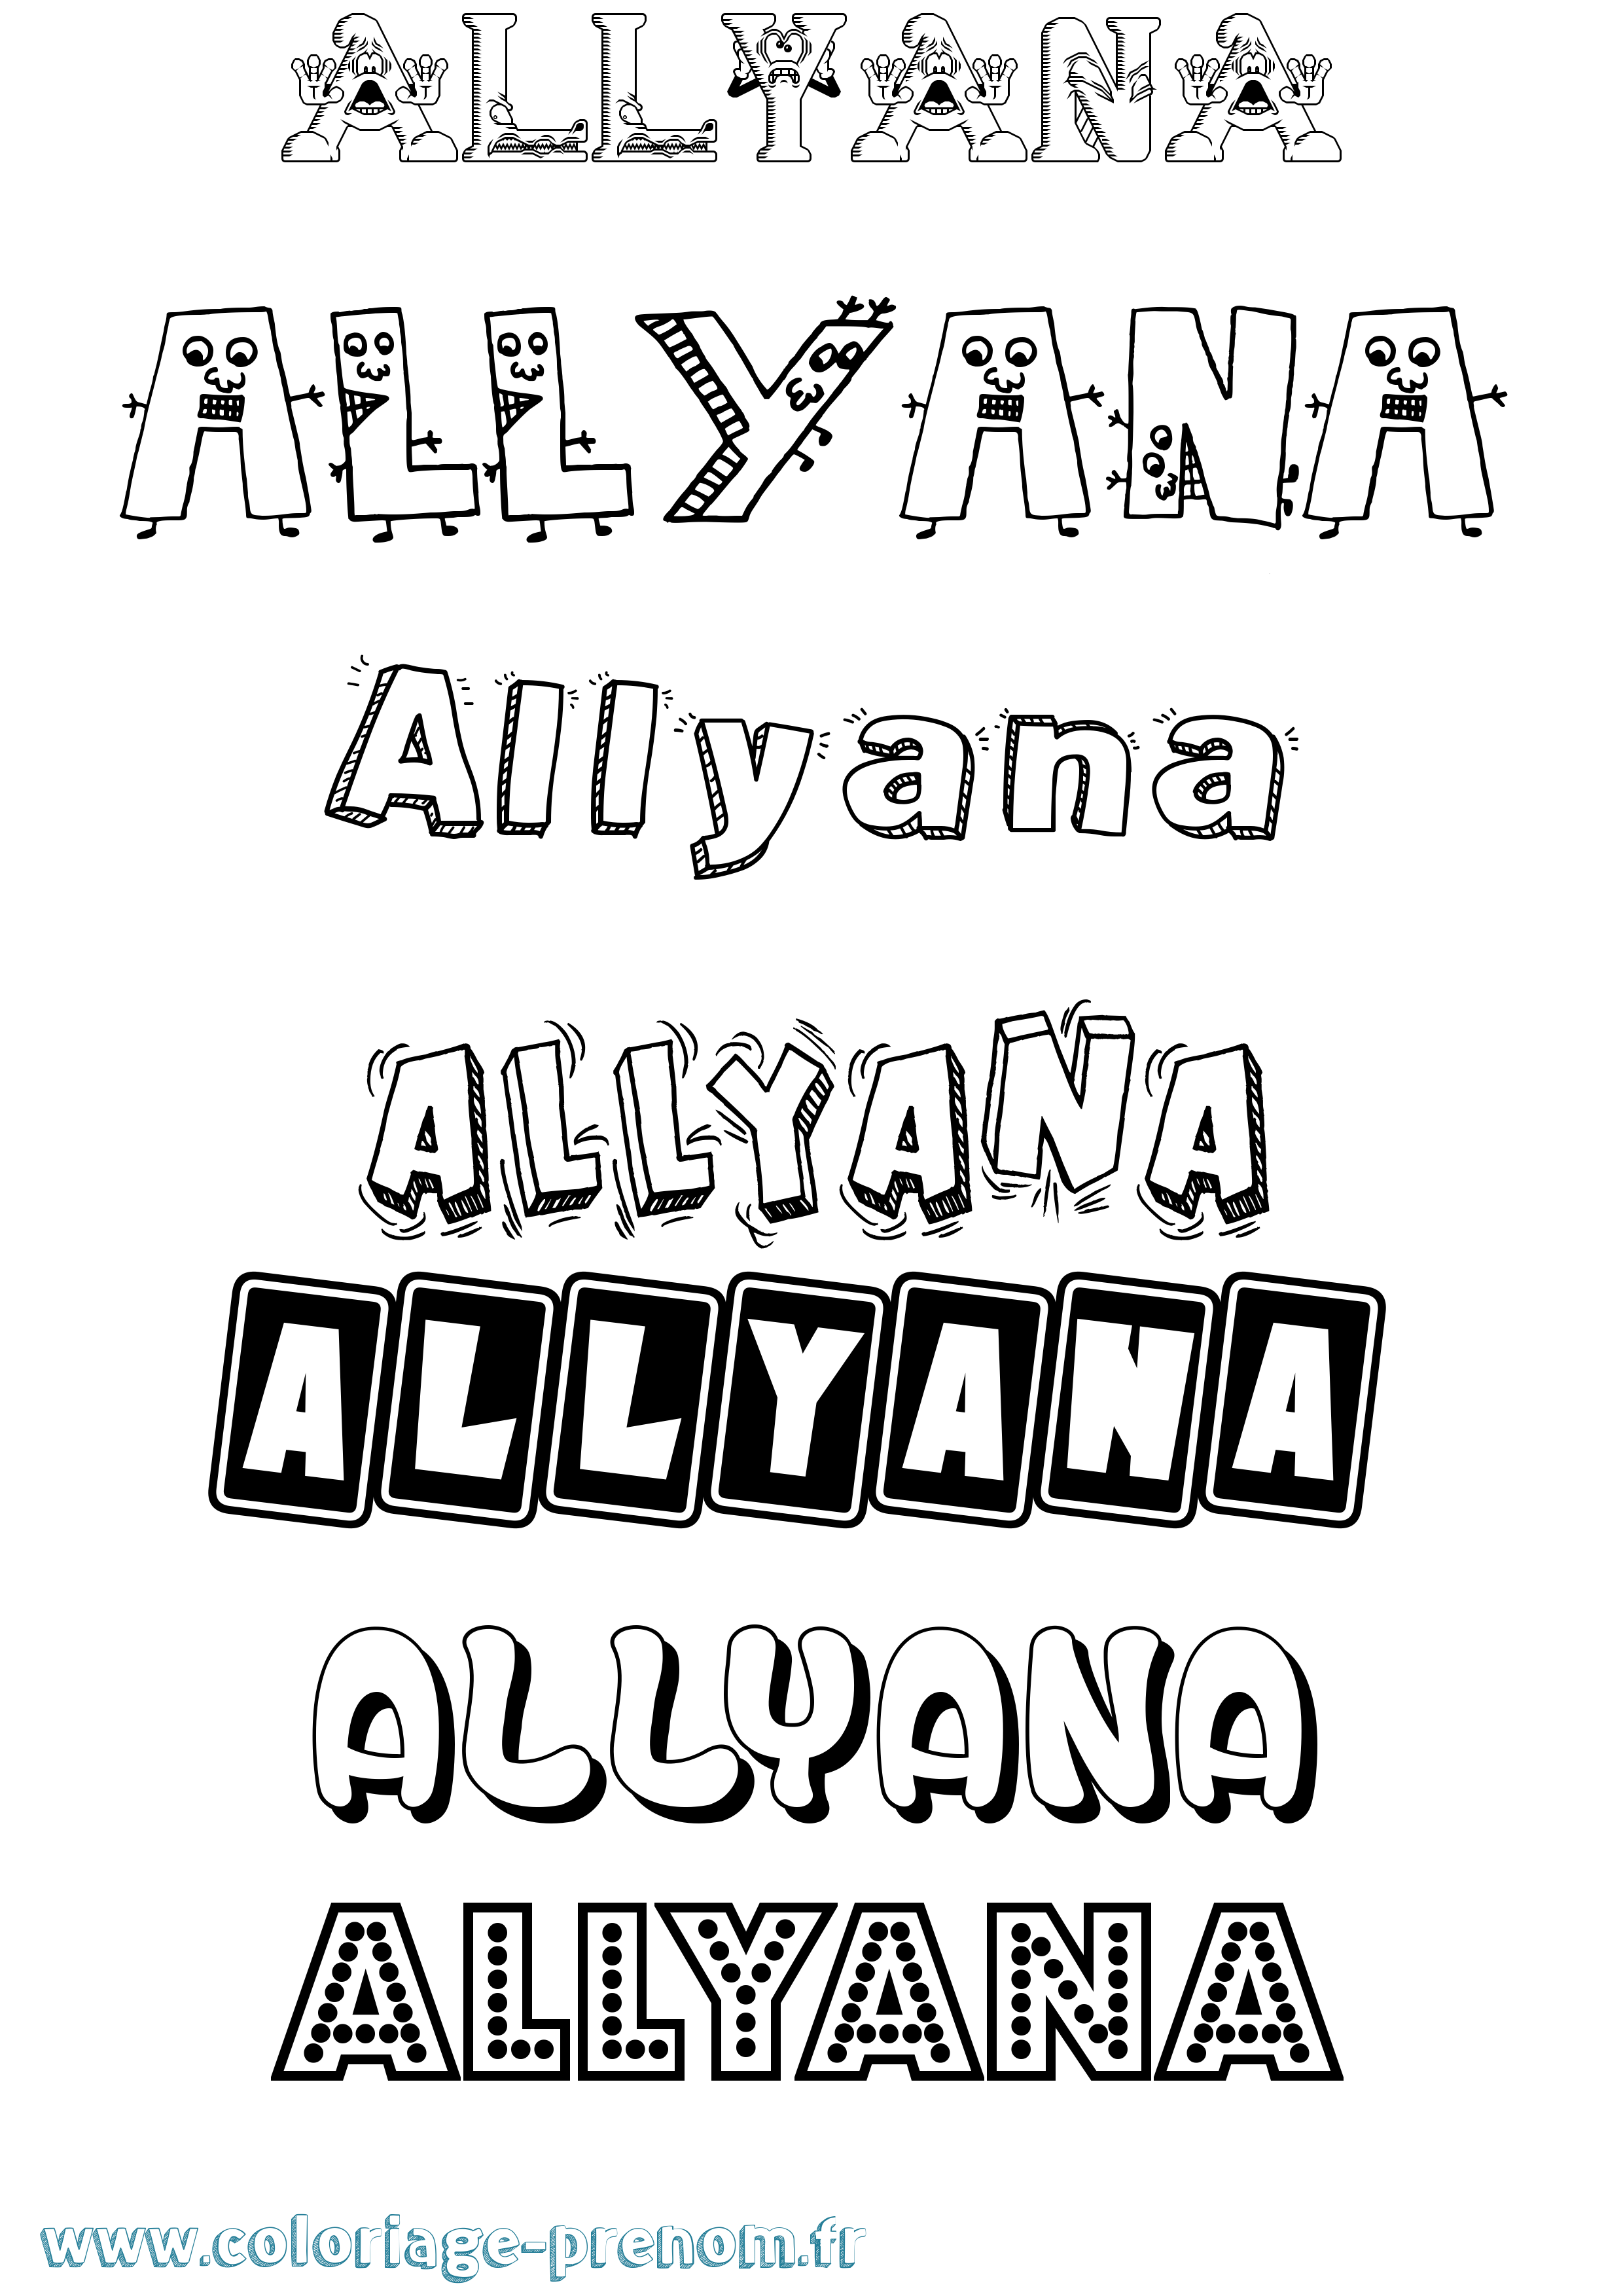 Coloriage prénom Allyana Fun